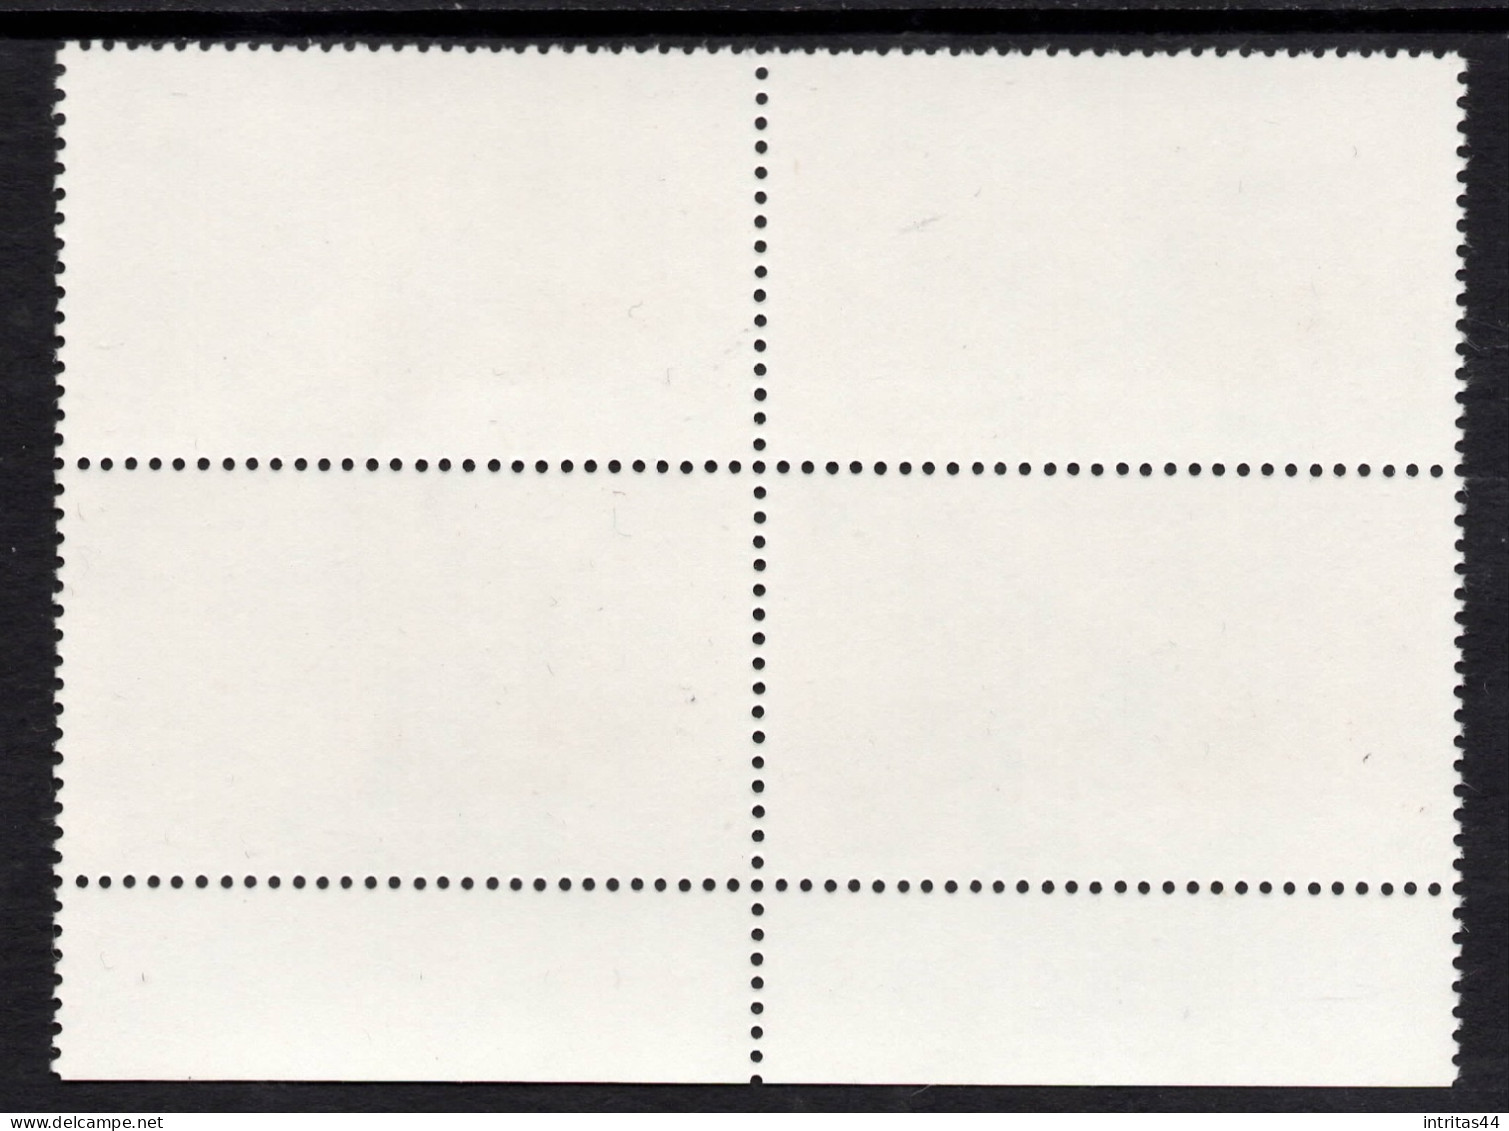 NEW ZEALAND 1979 I.Y.C. 10c "CHILDREN" SELVEDGE BLOCK OF (4)  MNH - Blocks & Sheetlets